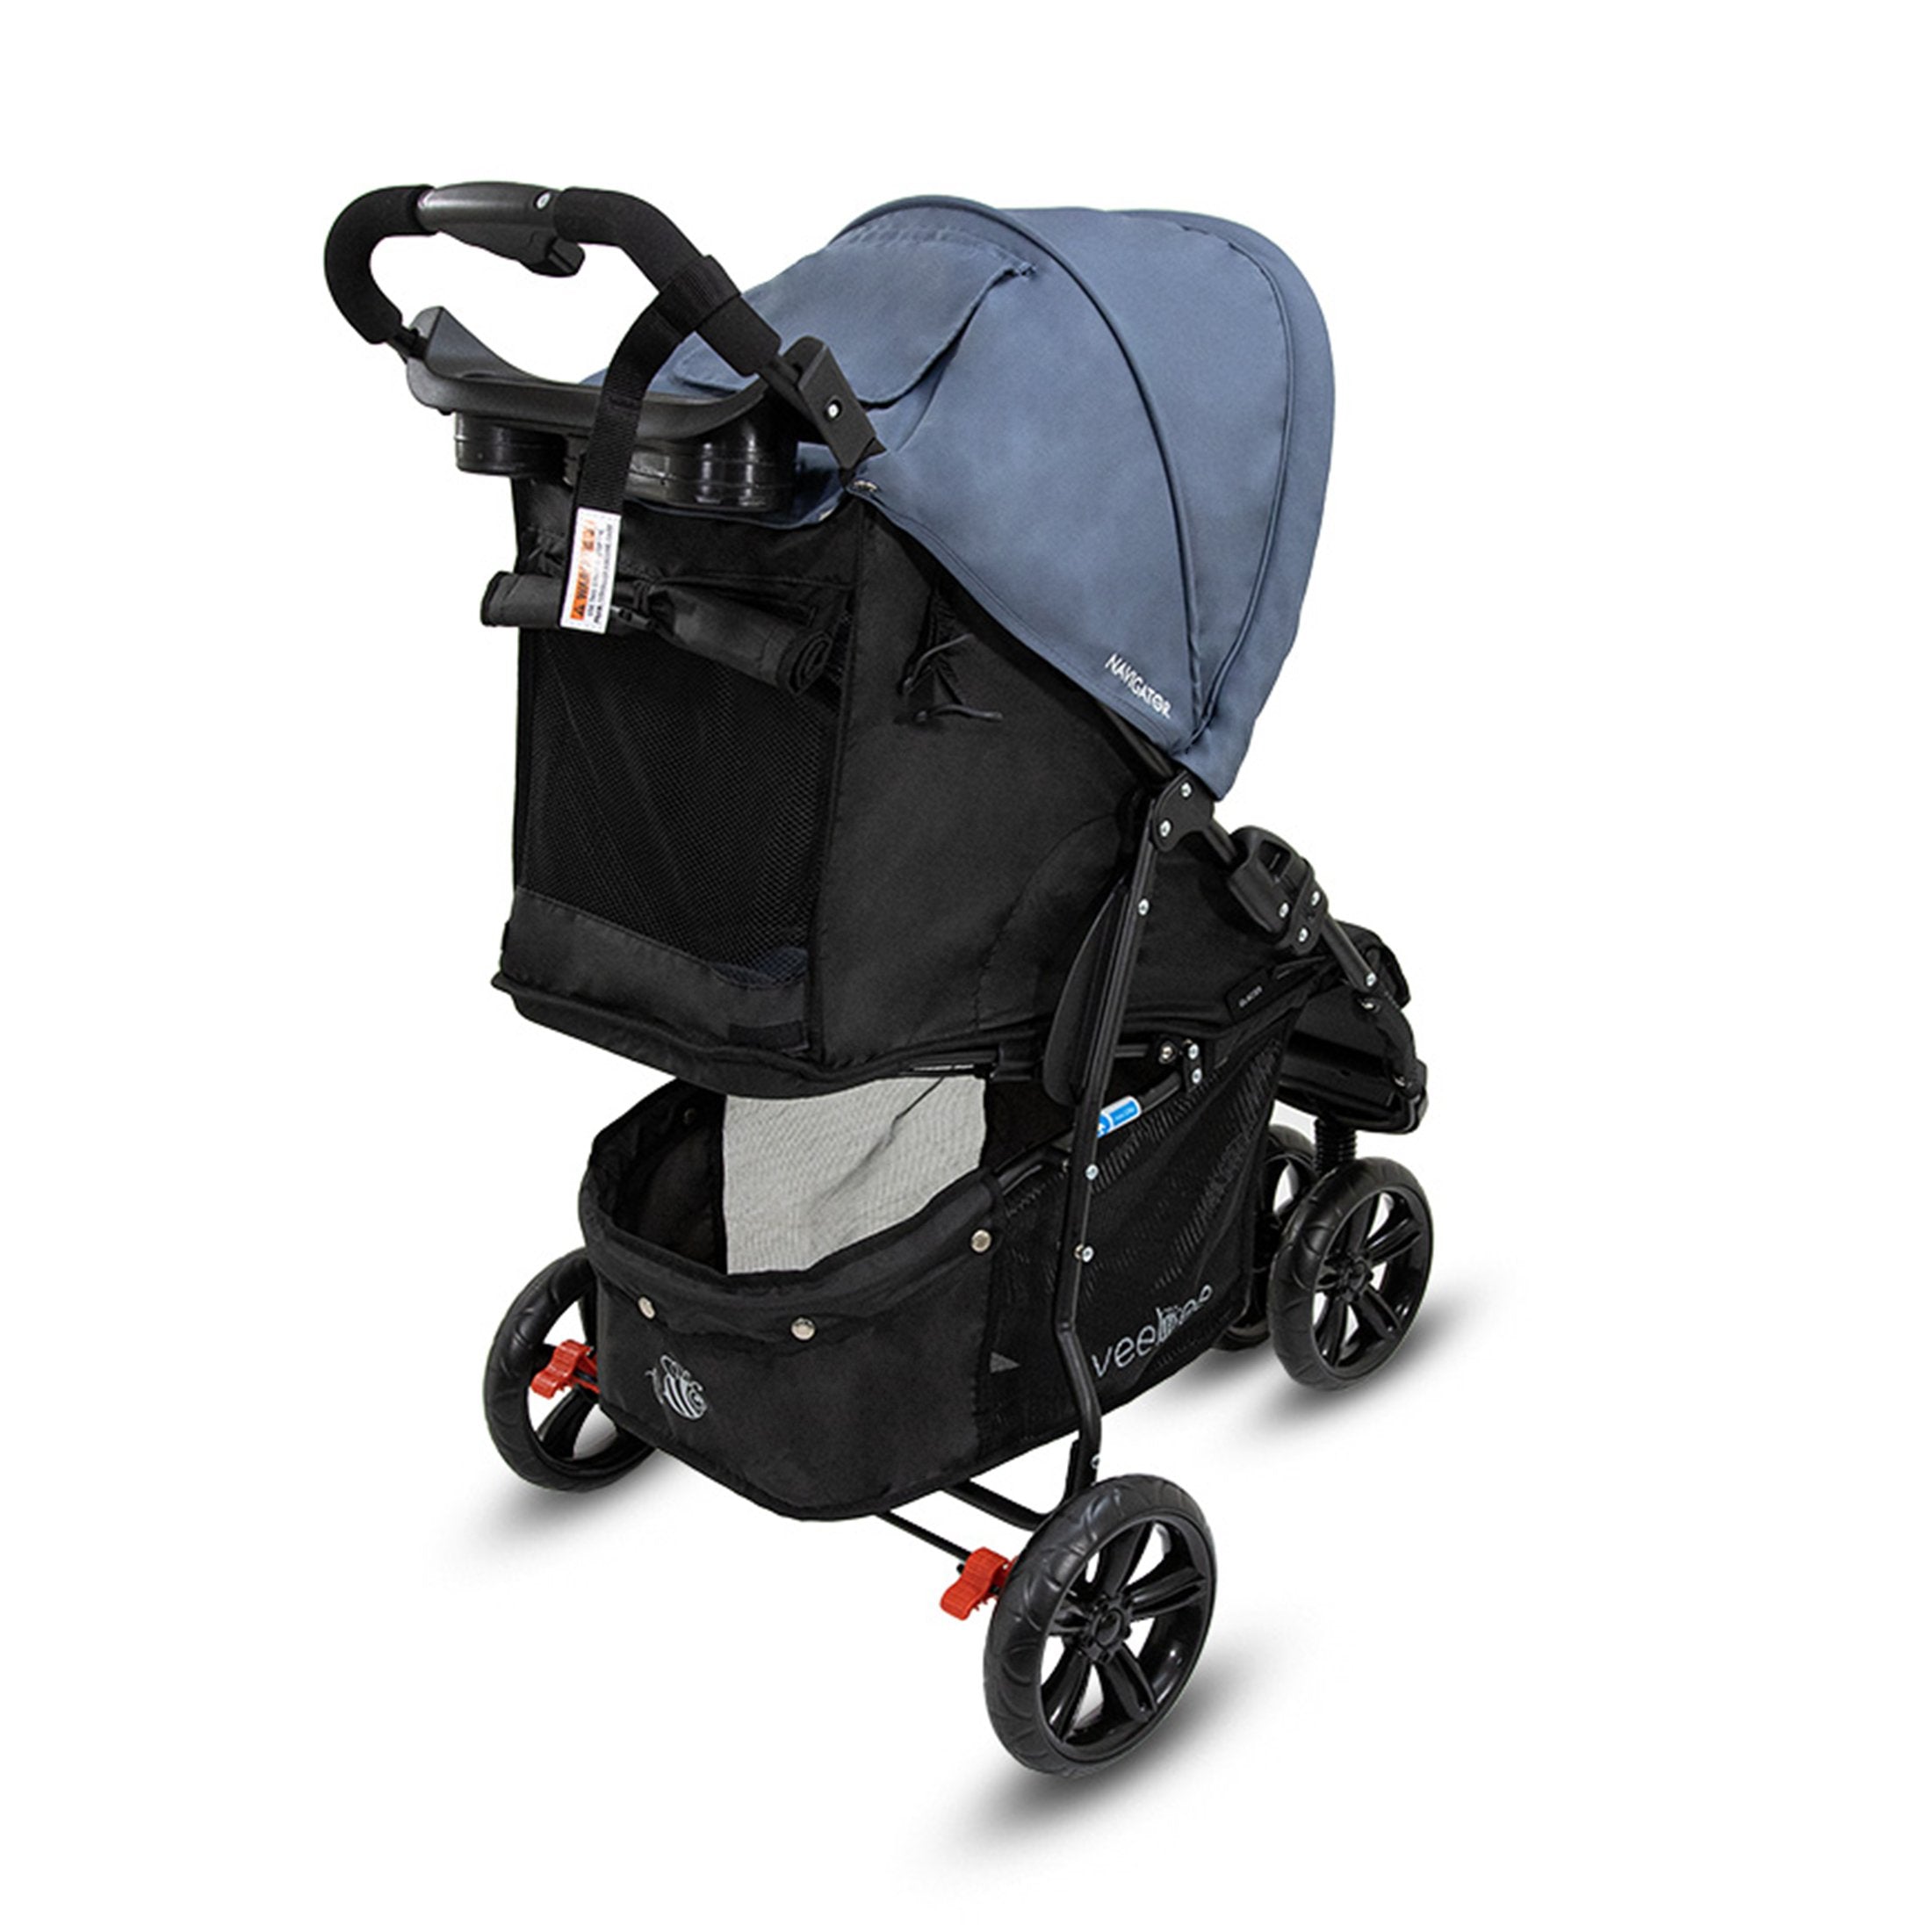 Veebee Navigator Stroller 3-wheel Pram For Newborns To Toddlers - Glacier - SILBERSHELL